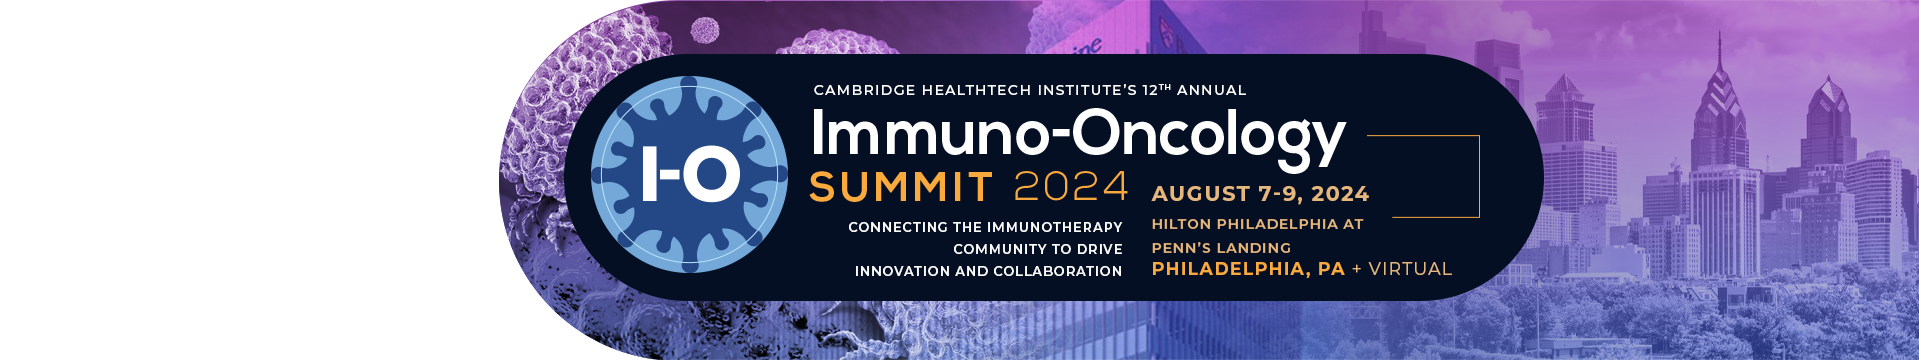 12th Annual Immuno-Oncology Summit 2024, Philadelphia, Pennsylvania, United States